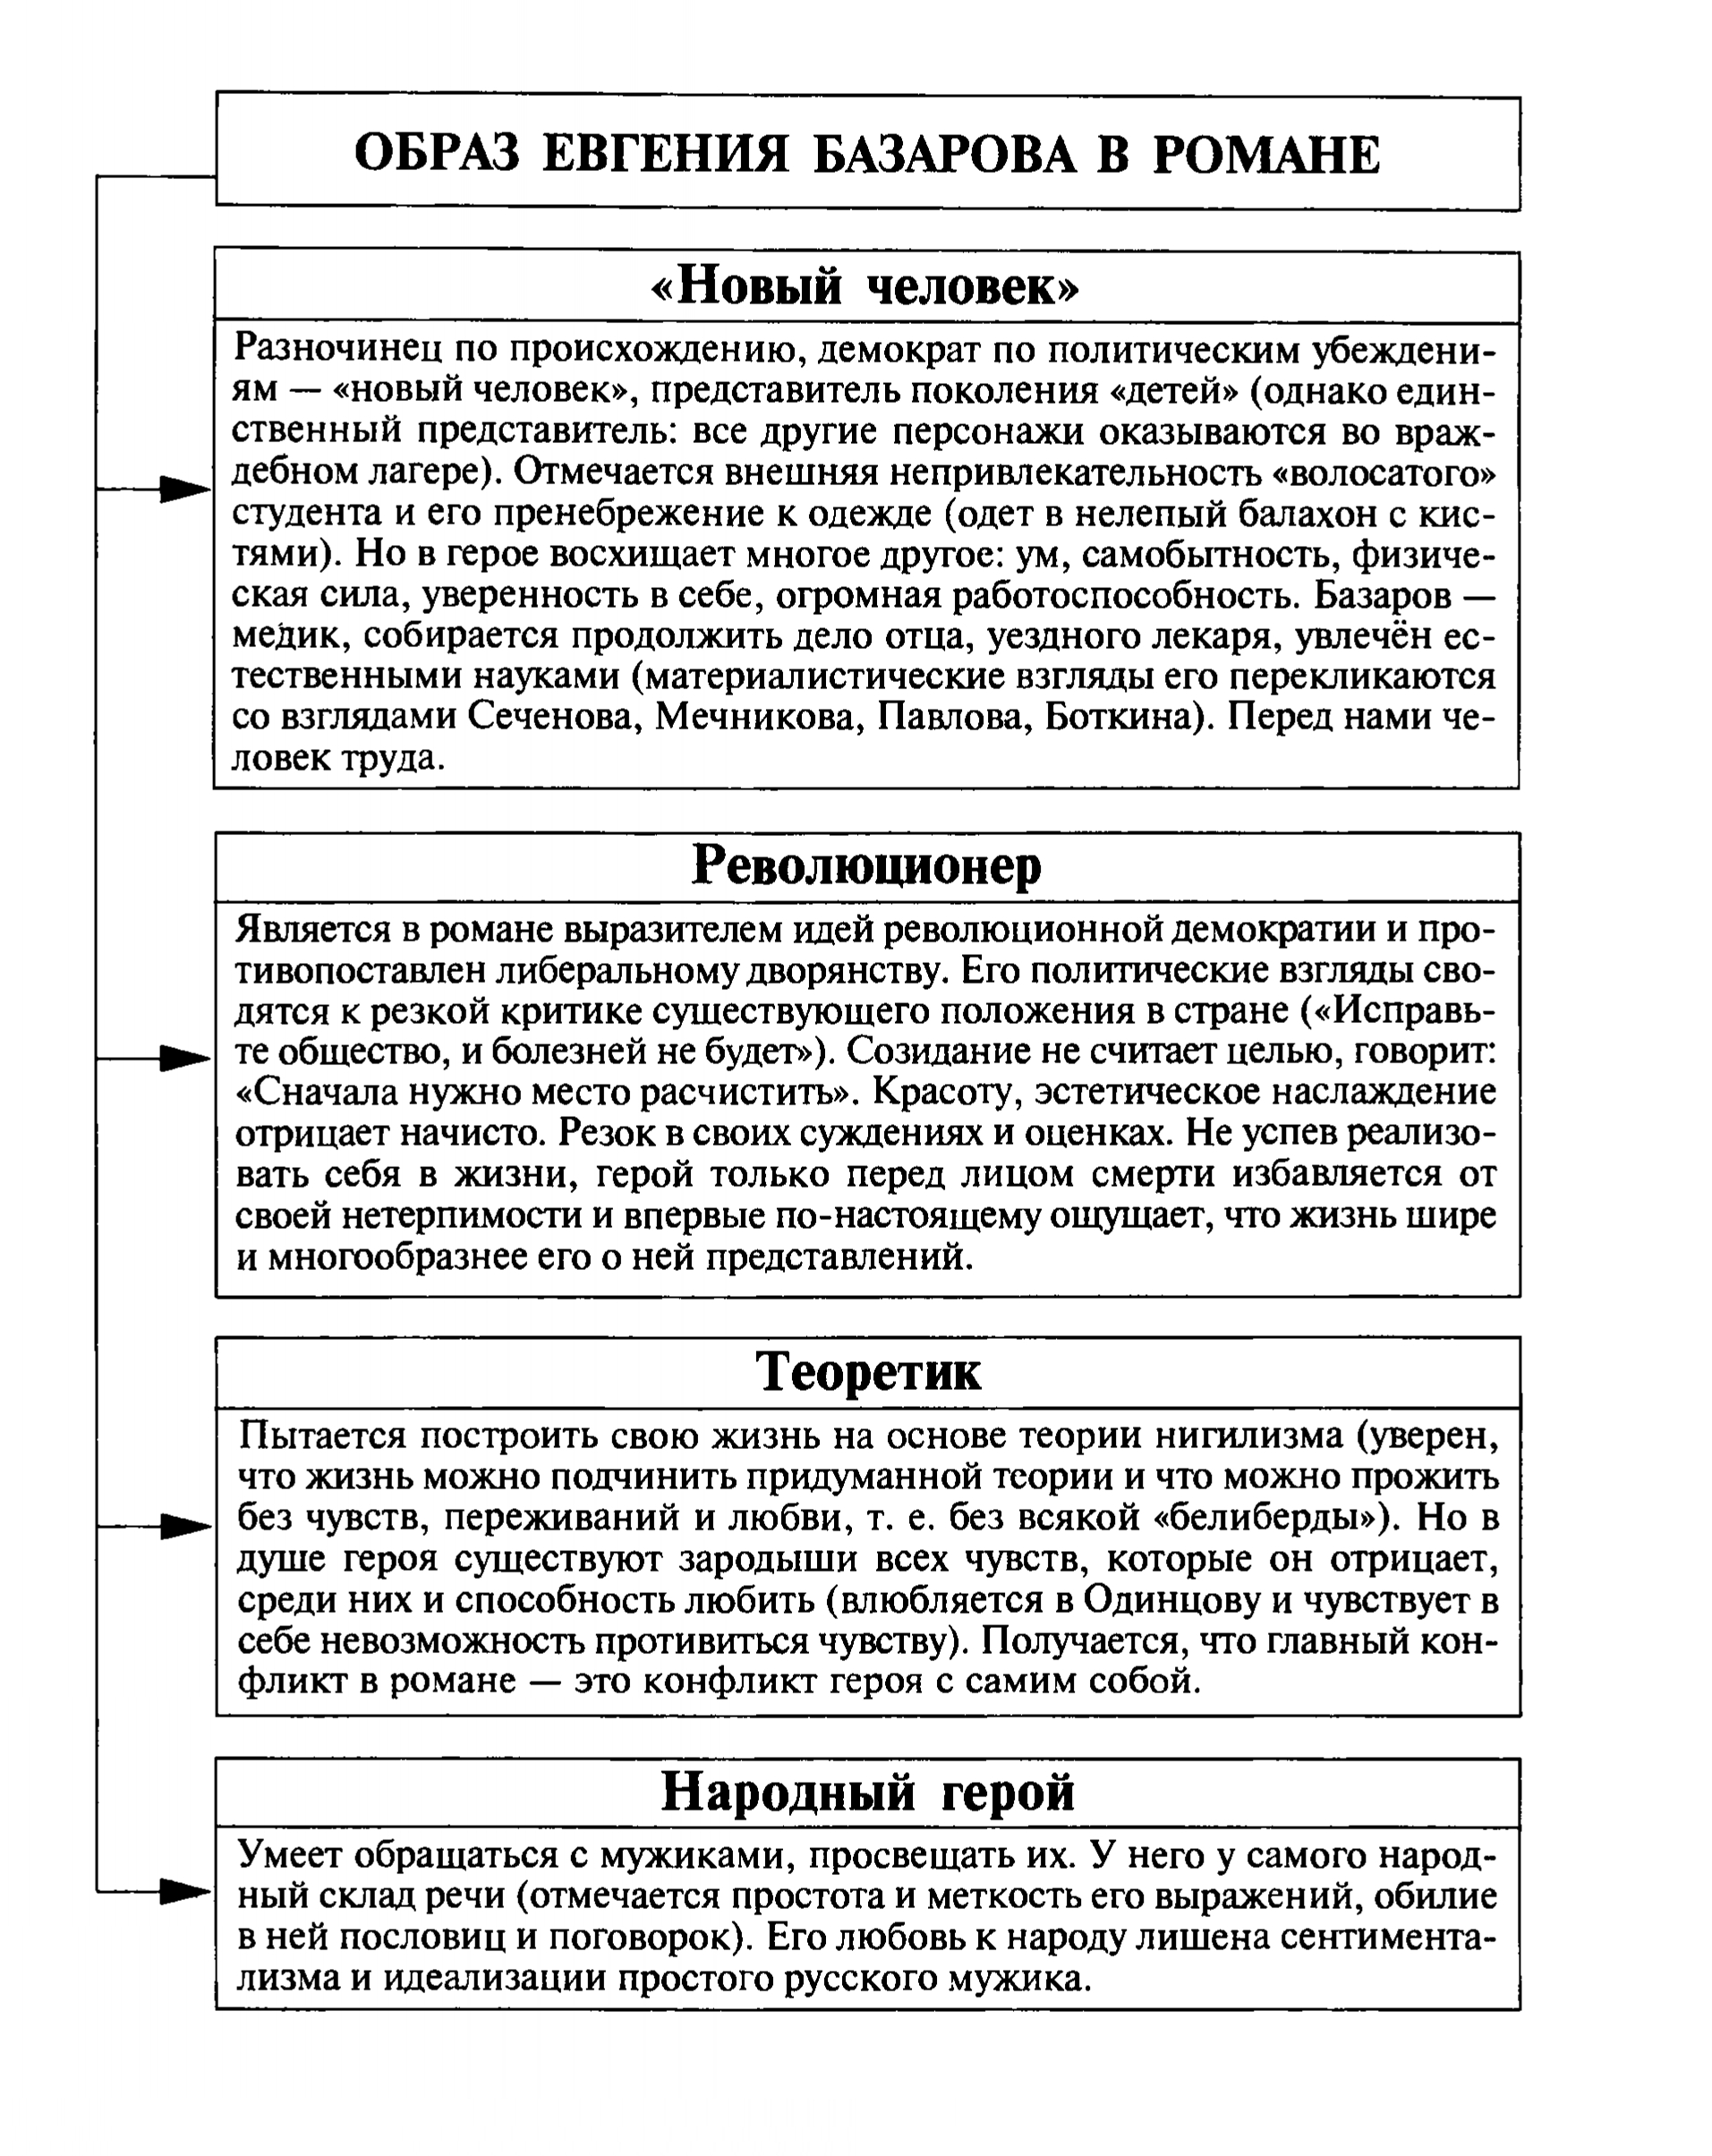 Образ Евгения Базарова (таблица)